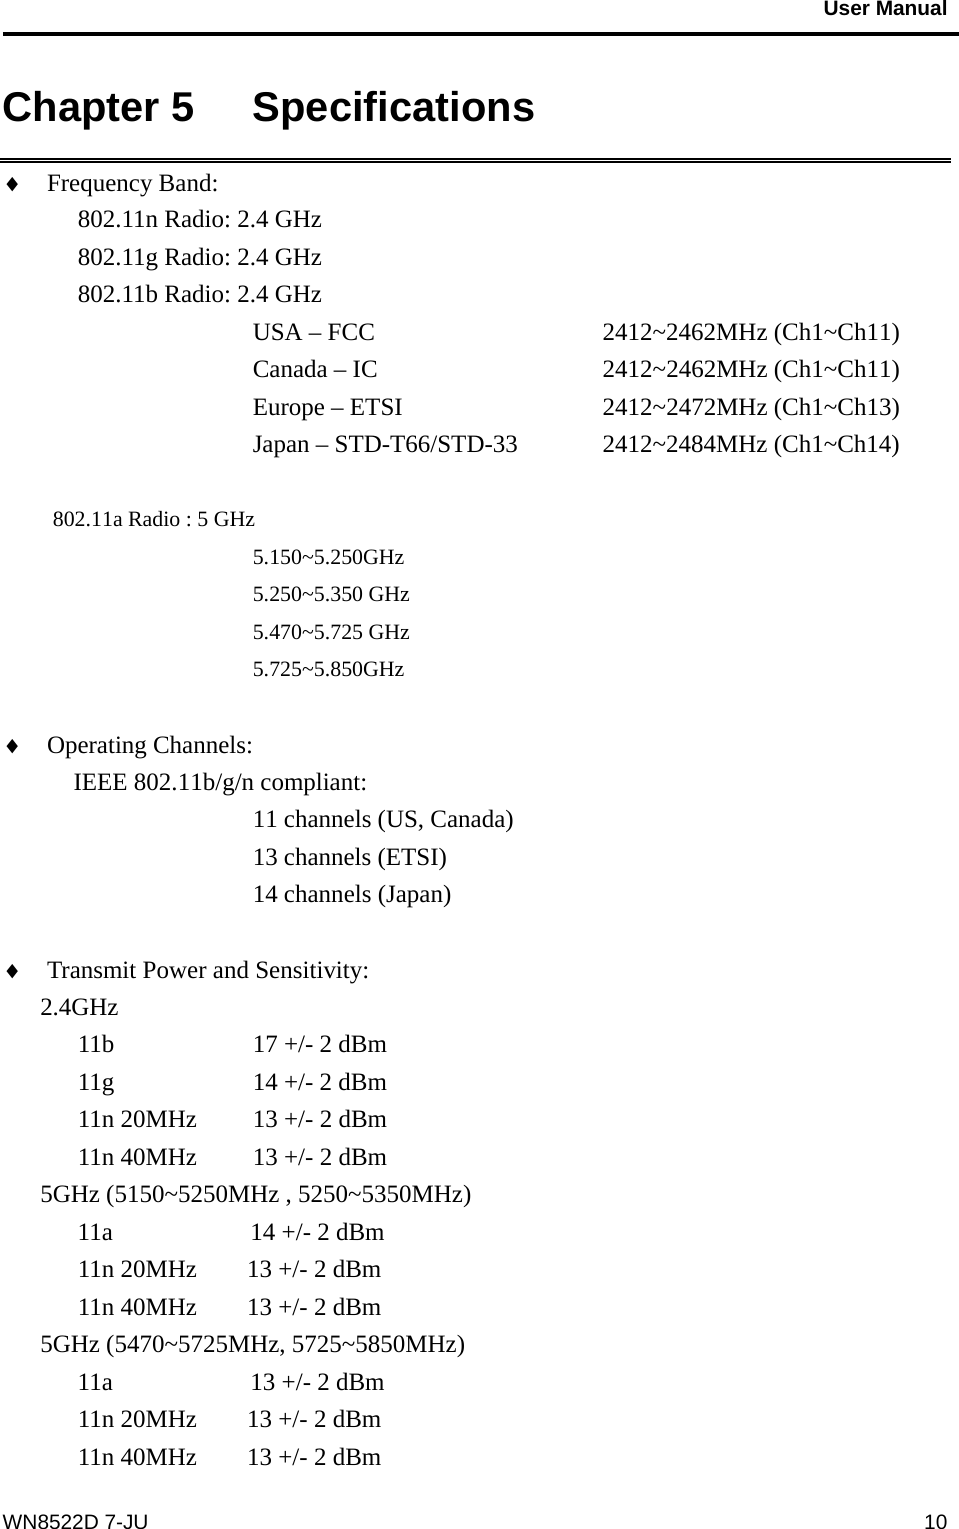                                           User Manual                                              WN8522D 7-JU  10Chapter 5   Specifications   ♦ Frequency Band:   802.11n Radio: 2.4 GHz     802.11g Radio: 2.4 GHz   802.11b Radio: 2.4 GHz USA – FCC       2412~2462MHz (Ch1~Ch11)      Canada – IC     2412~2462MHz (Ch1~Ch11)      Europe – ETSI     2412~2472MHz (Ch1~Ch13)         Japan – STD-T66/STD-33  2412~2484MHz (Ch1~Ch14)       802.11a Radio : 5 GHz 5.150~5.250GHz 5.250~5.350 GHz 5.470~5.725 GHz 5.725~5.850GHz  ♦ Operating Channels:    IEEE 802.11b/g/n compliant: 11 channels (US, Canada) 13 channels (ETSI) 14 channels (Japan)  ♦ Transmit Power and Sensitivity:   2.4GHz 11b          17 +/- 2 dBm 11g          14 +/- 2 dBm 11n 20MHz      13 +/- 2 dBm 11n 40MHz    13 +/- 2 dBm 5GHz (5150~5250MHz , 5250~5350MHz)       11a           14 +/- 2 dBm       11n 20MHz    13 +/- 2 dBm       11n 40MHz    13 +/- 2 dBm 5GHz (5470~5725MHz, 5725~5850MHz)       11a           13 +/- 2 dBm       11n 20MHz    13 +/- 2 dBm       11n 40MHz    13 +/- 2 dBm 